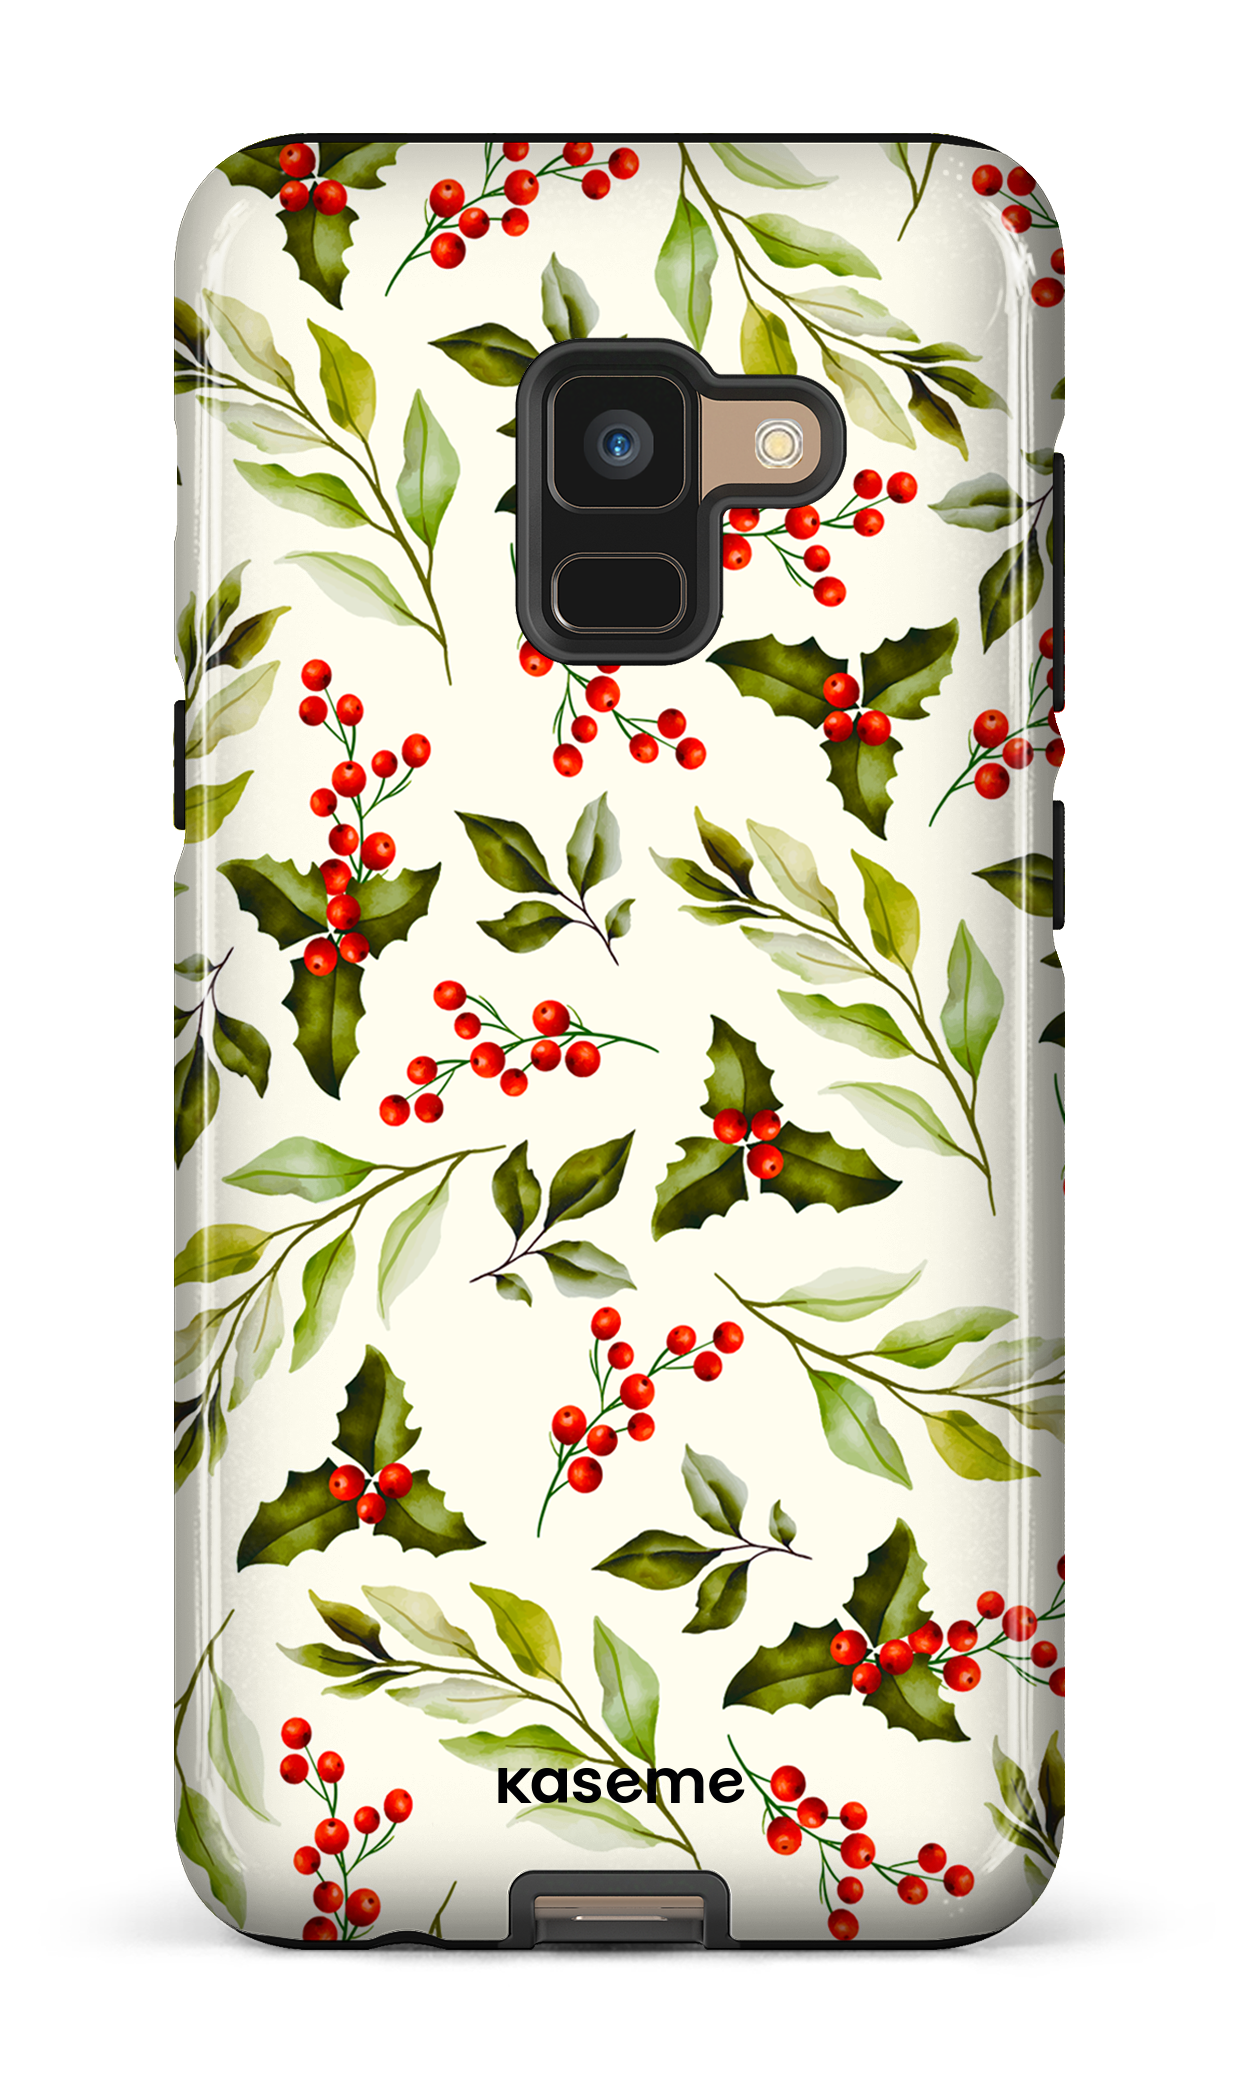 Mistletoe - Galaxy A8